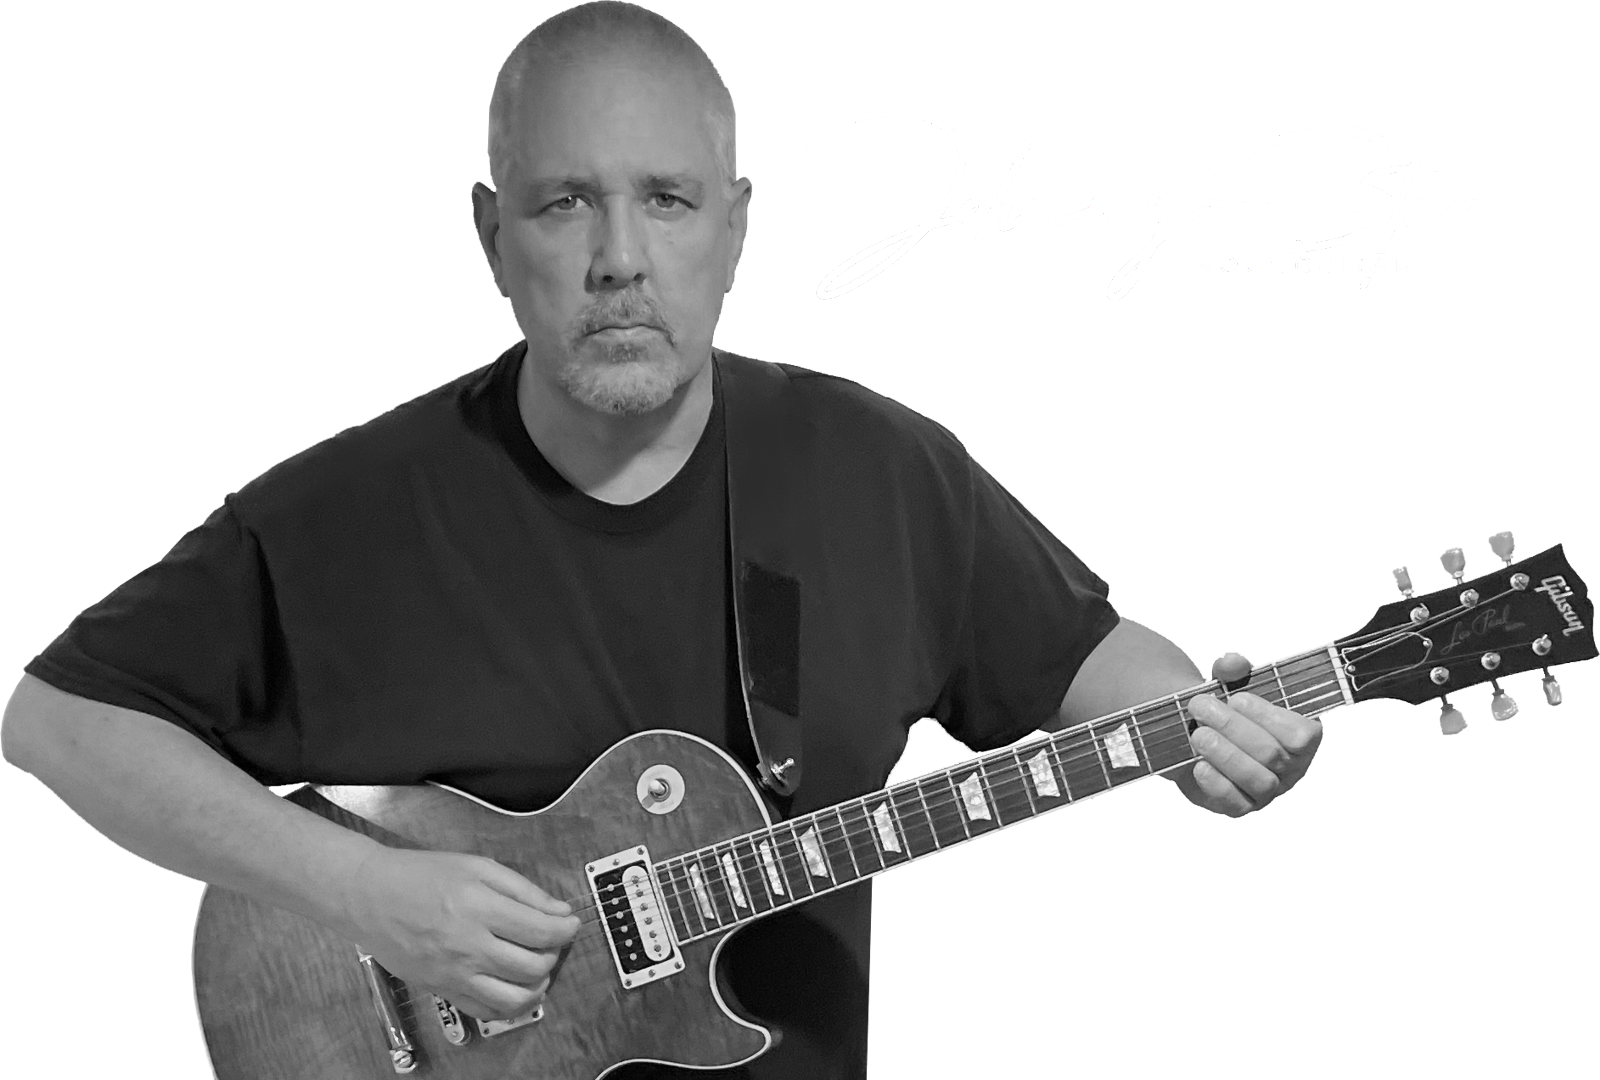 johnny-star-rock-guitar